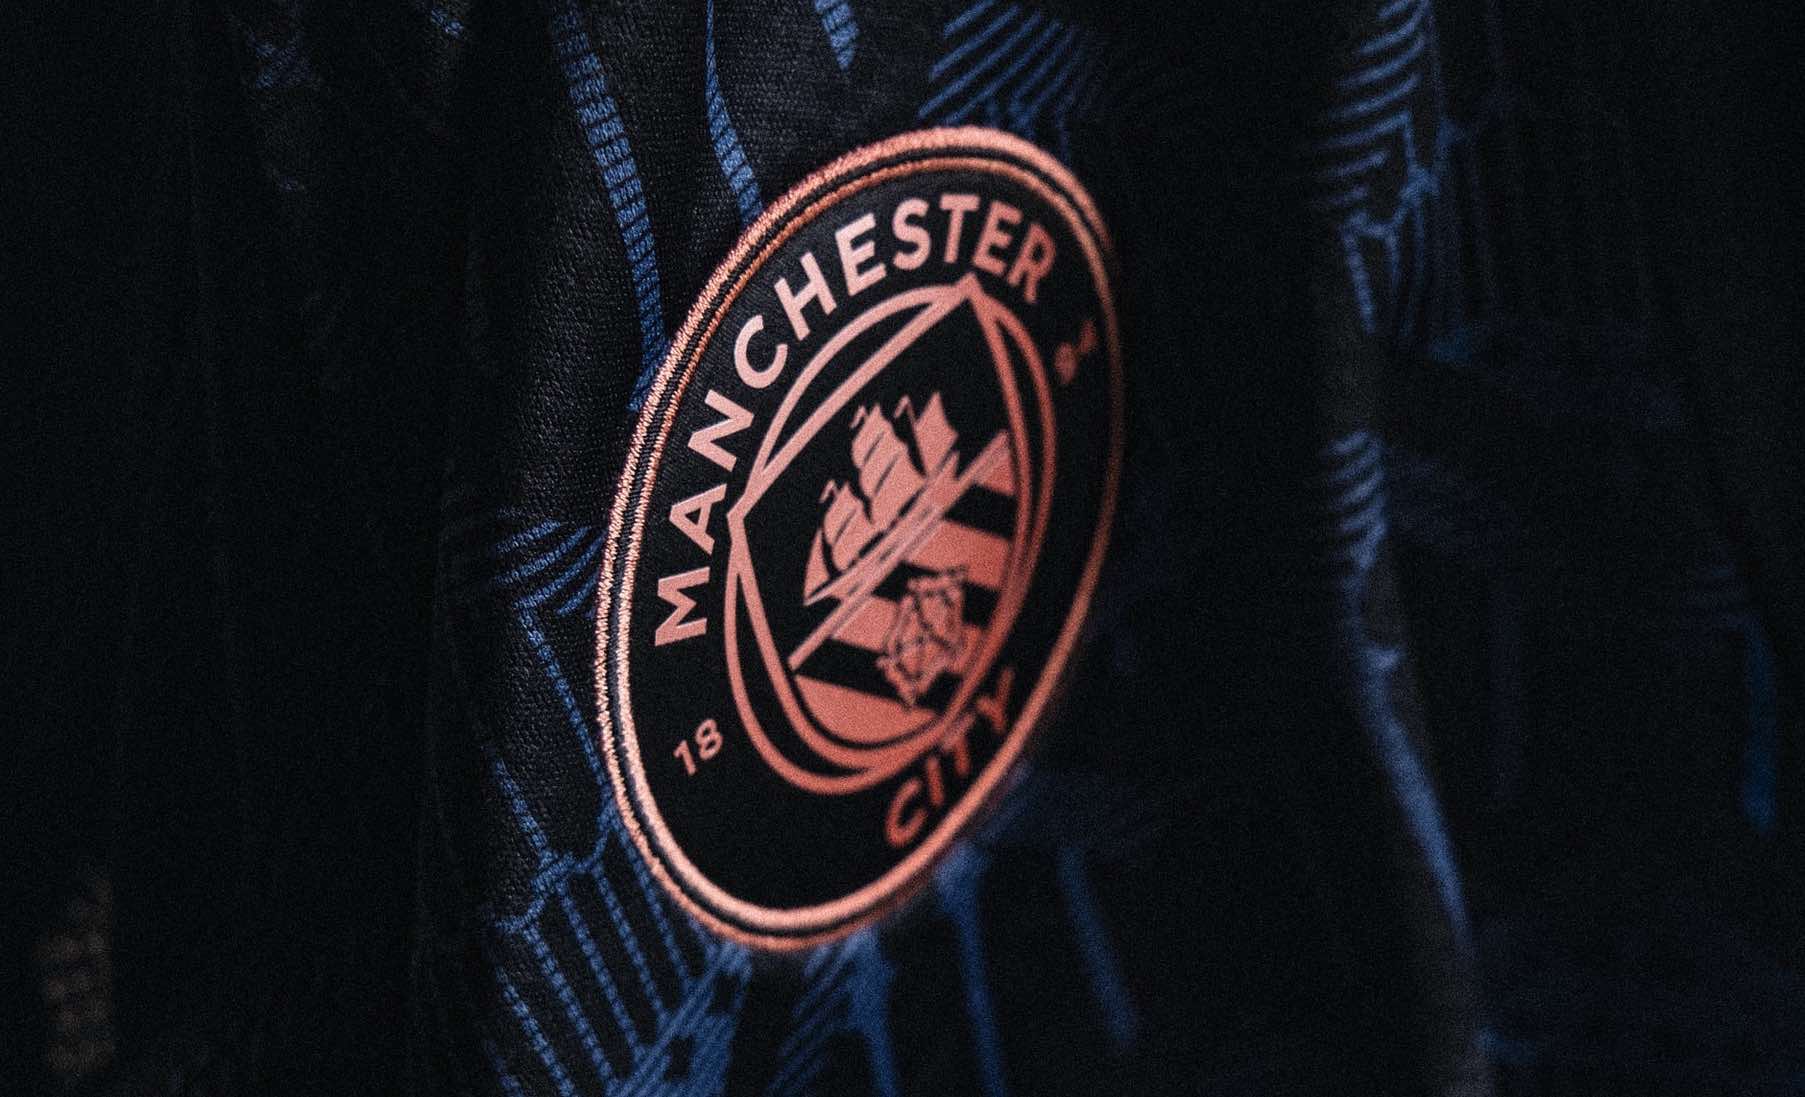 Manchester fútbol club